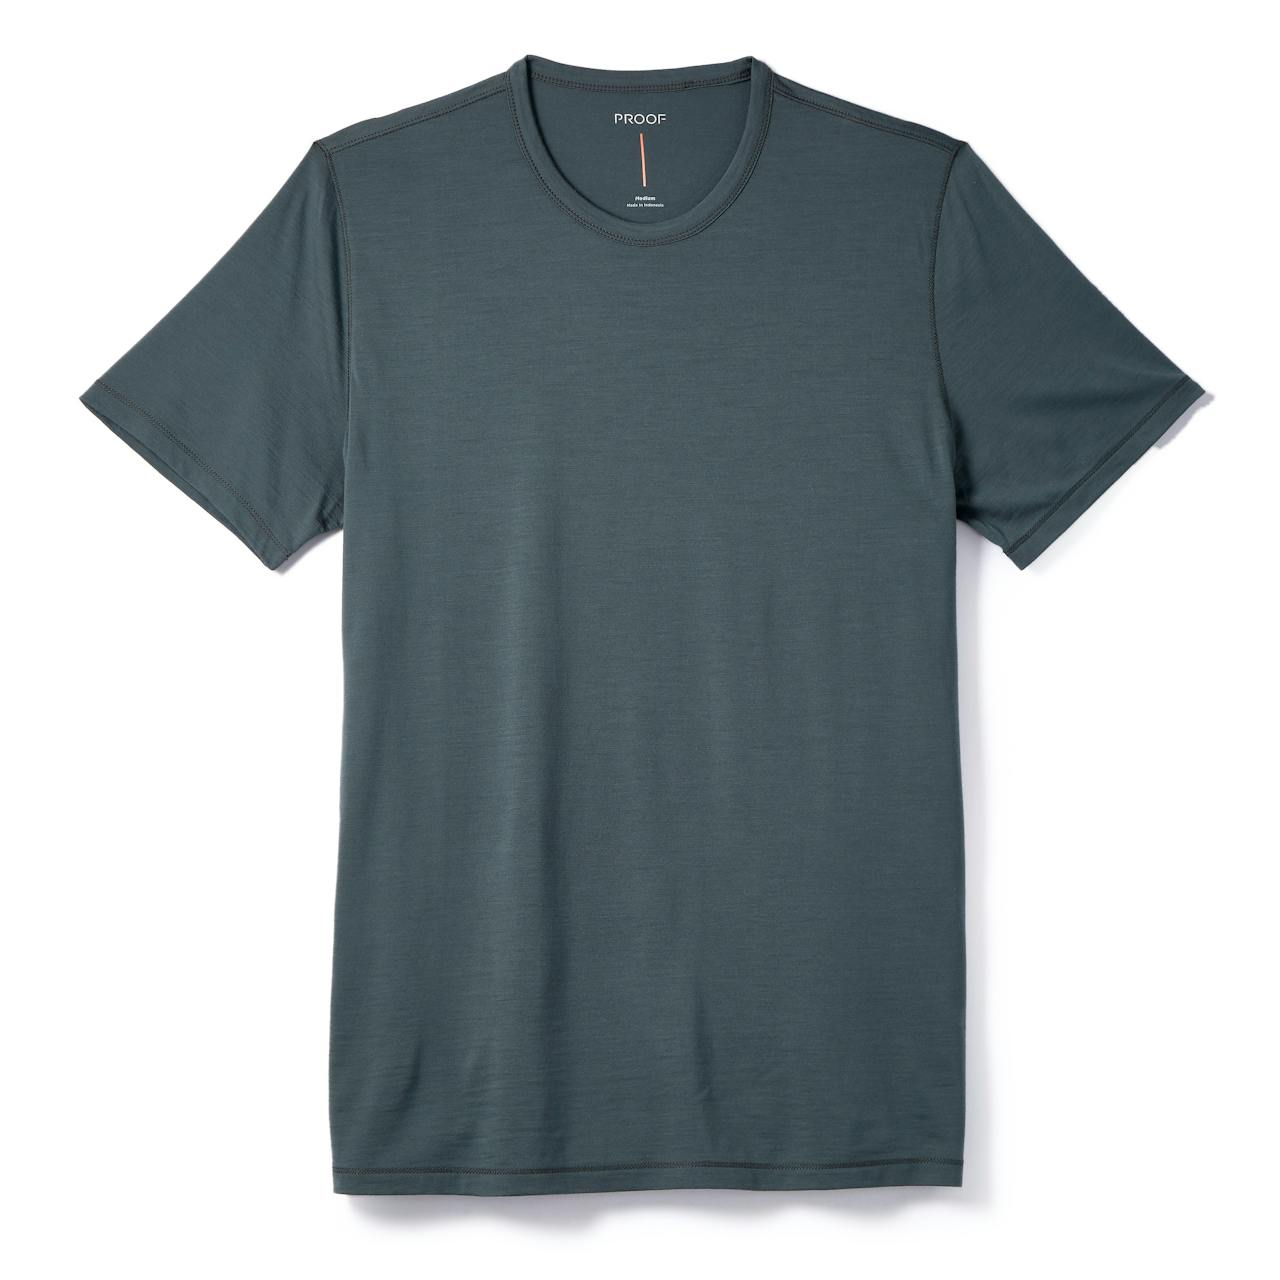 Proof 72-Hour Merino T-Shirt - Classic Fit - Falcon, T-Shirts